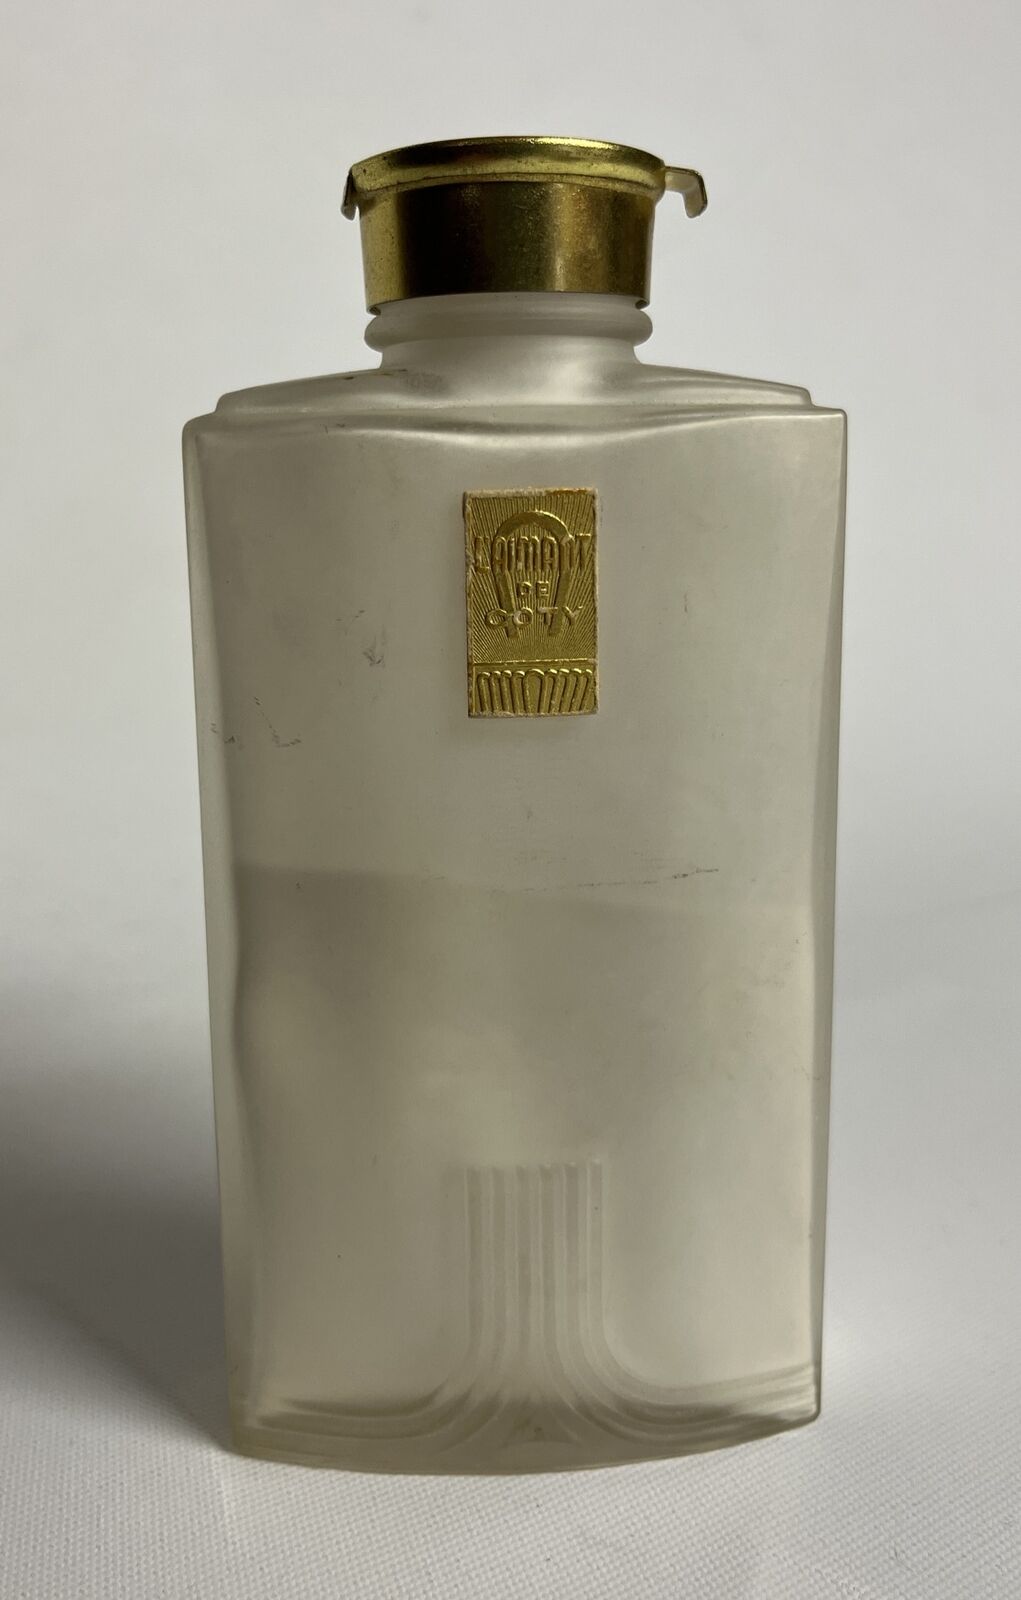 Vintage Art Deco Laimant de Coty Perfume Powder 4 Oz Bottle with Stopper